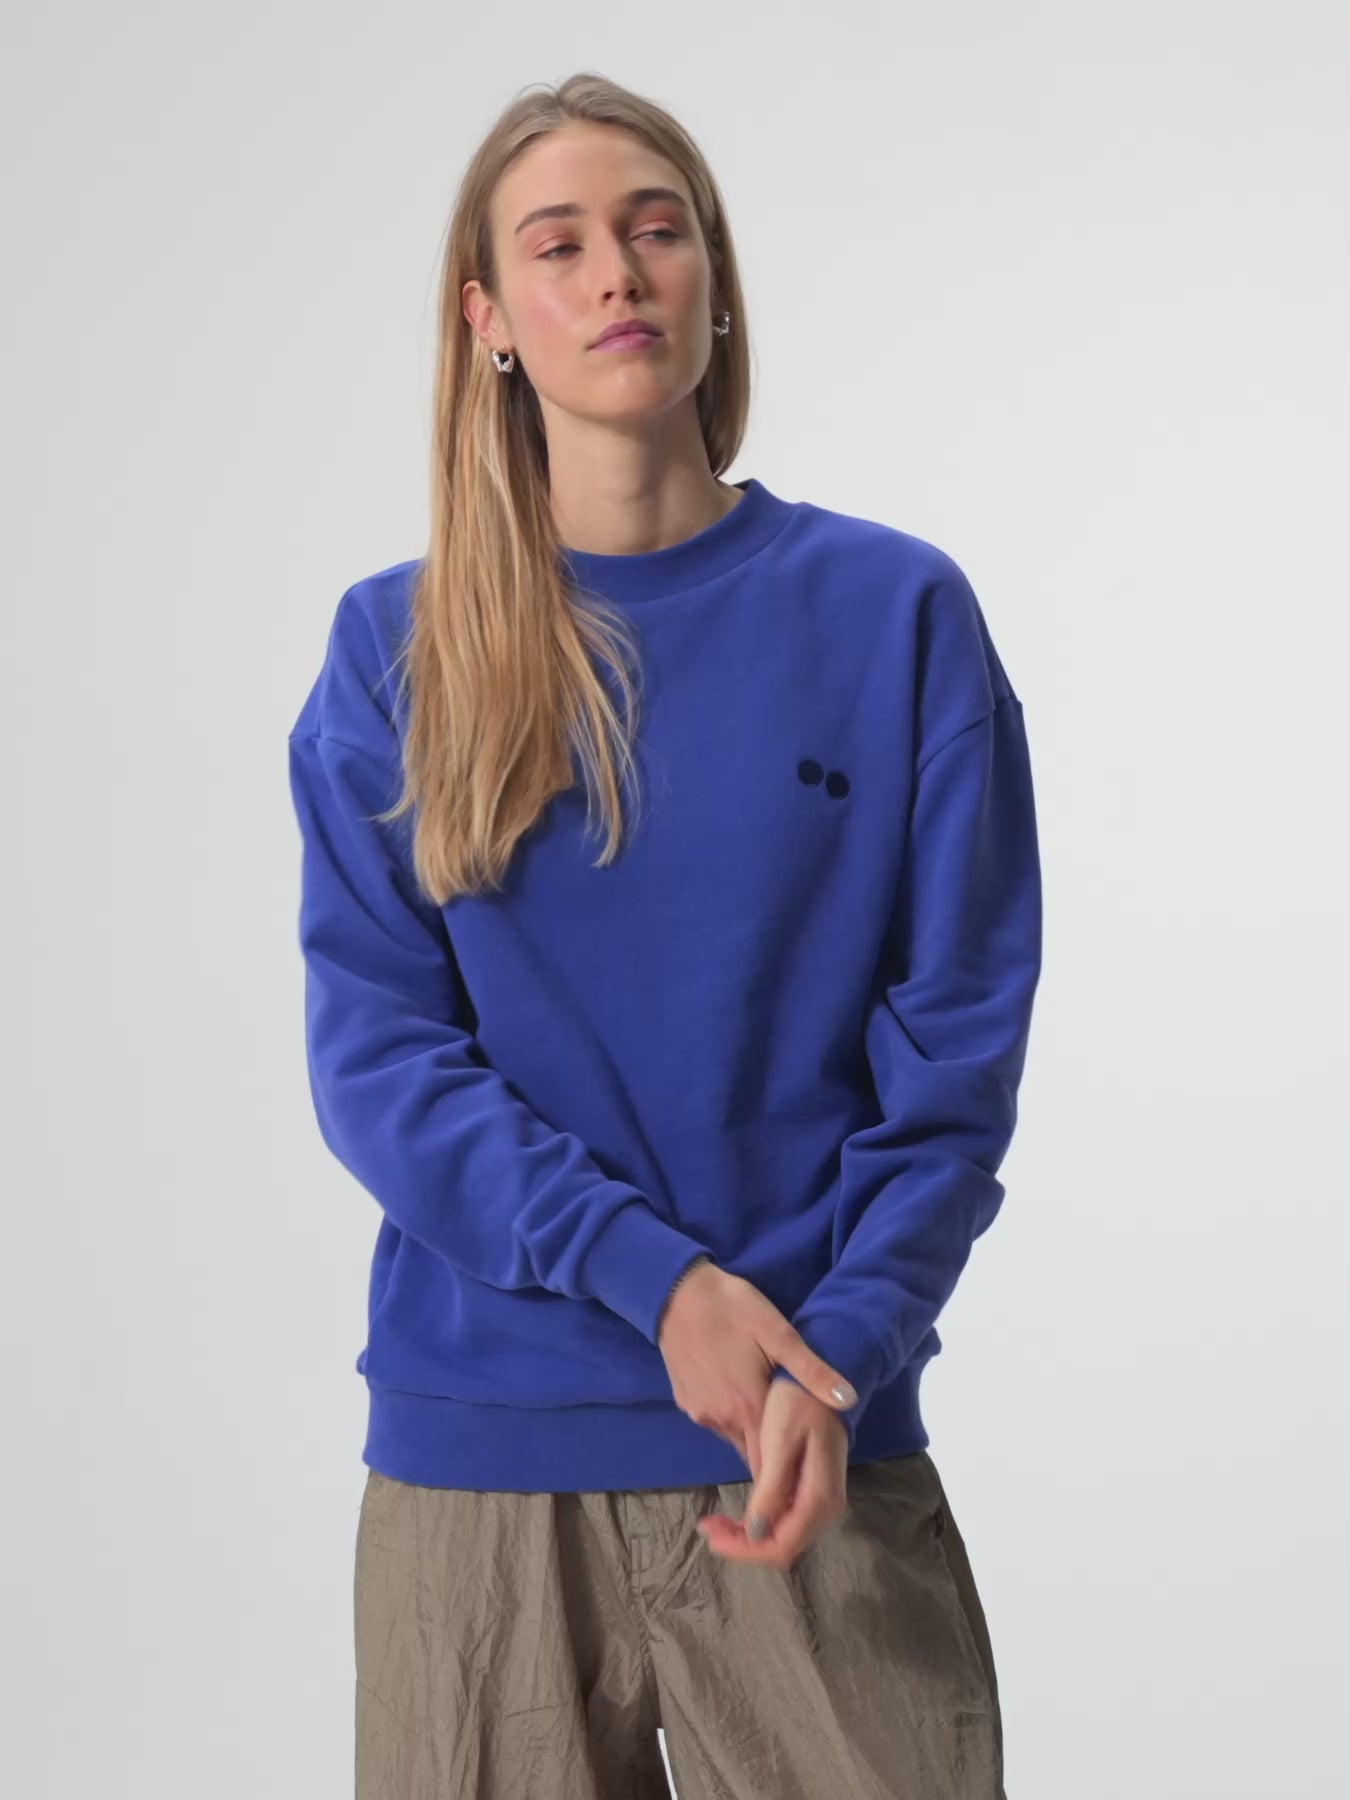 pinqponq-Sweatshirt-Unisex-Poppy-Blue-model-video